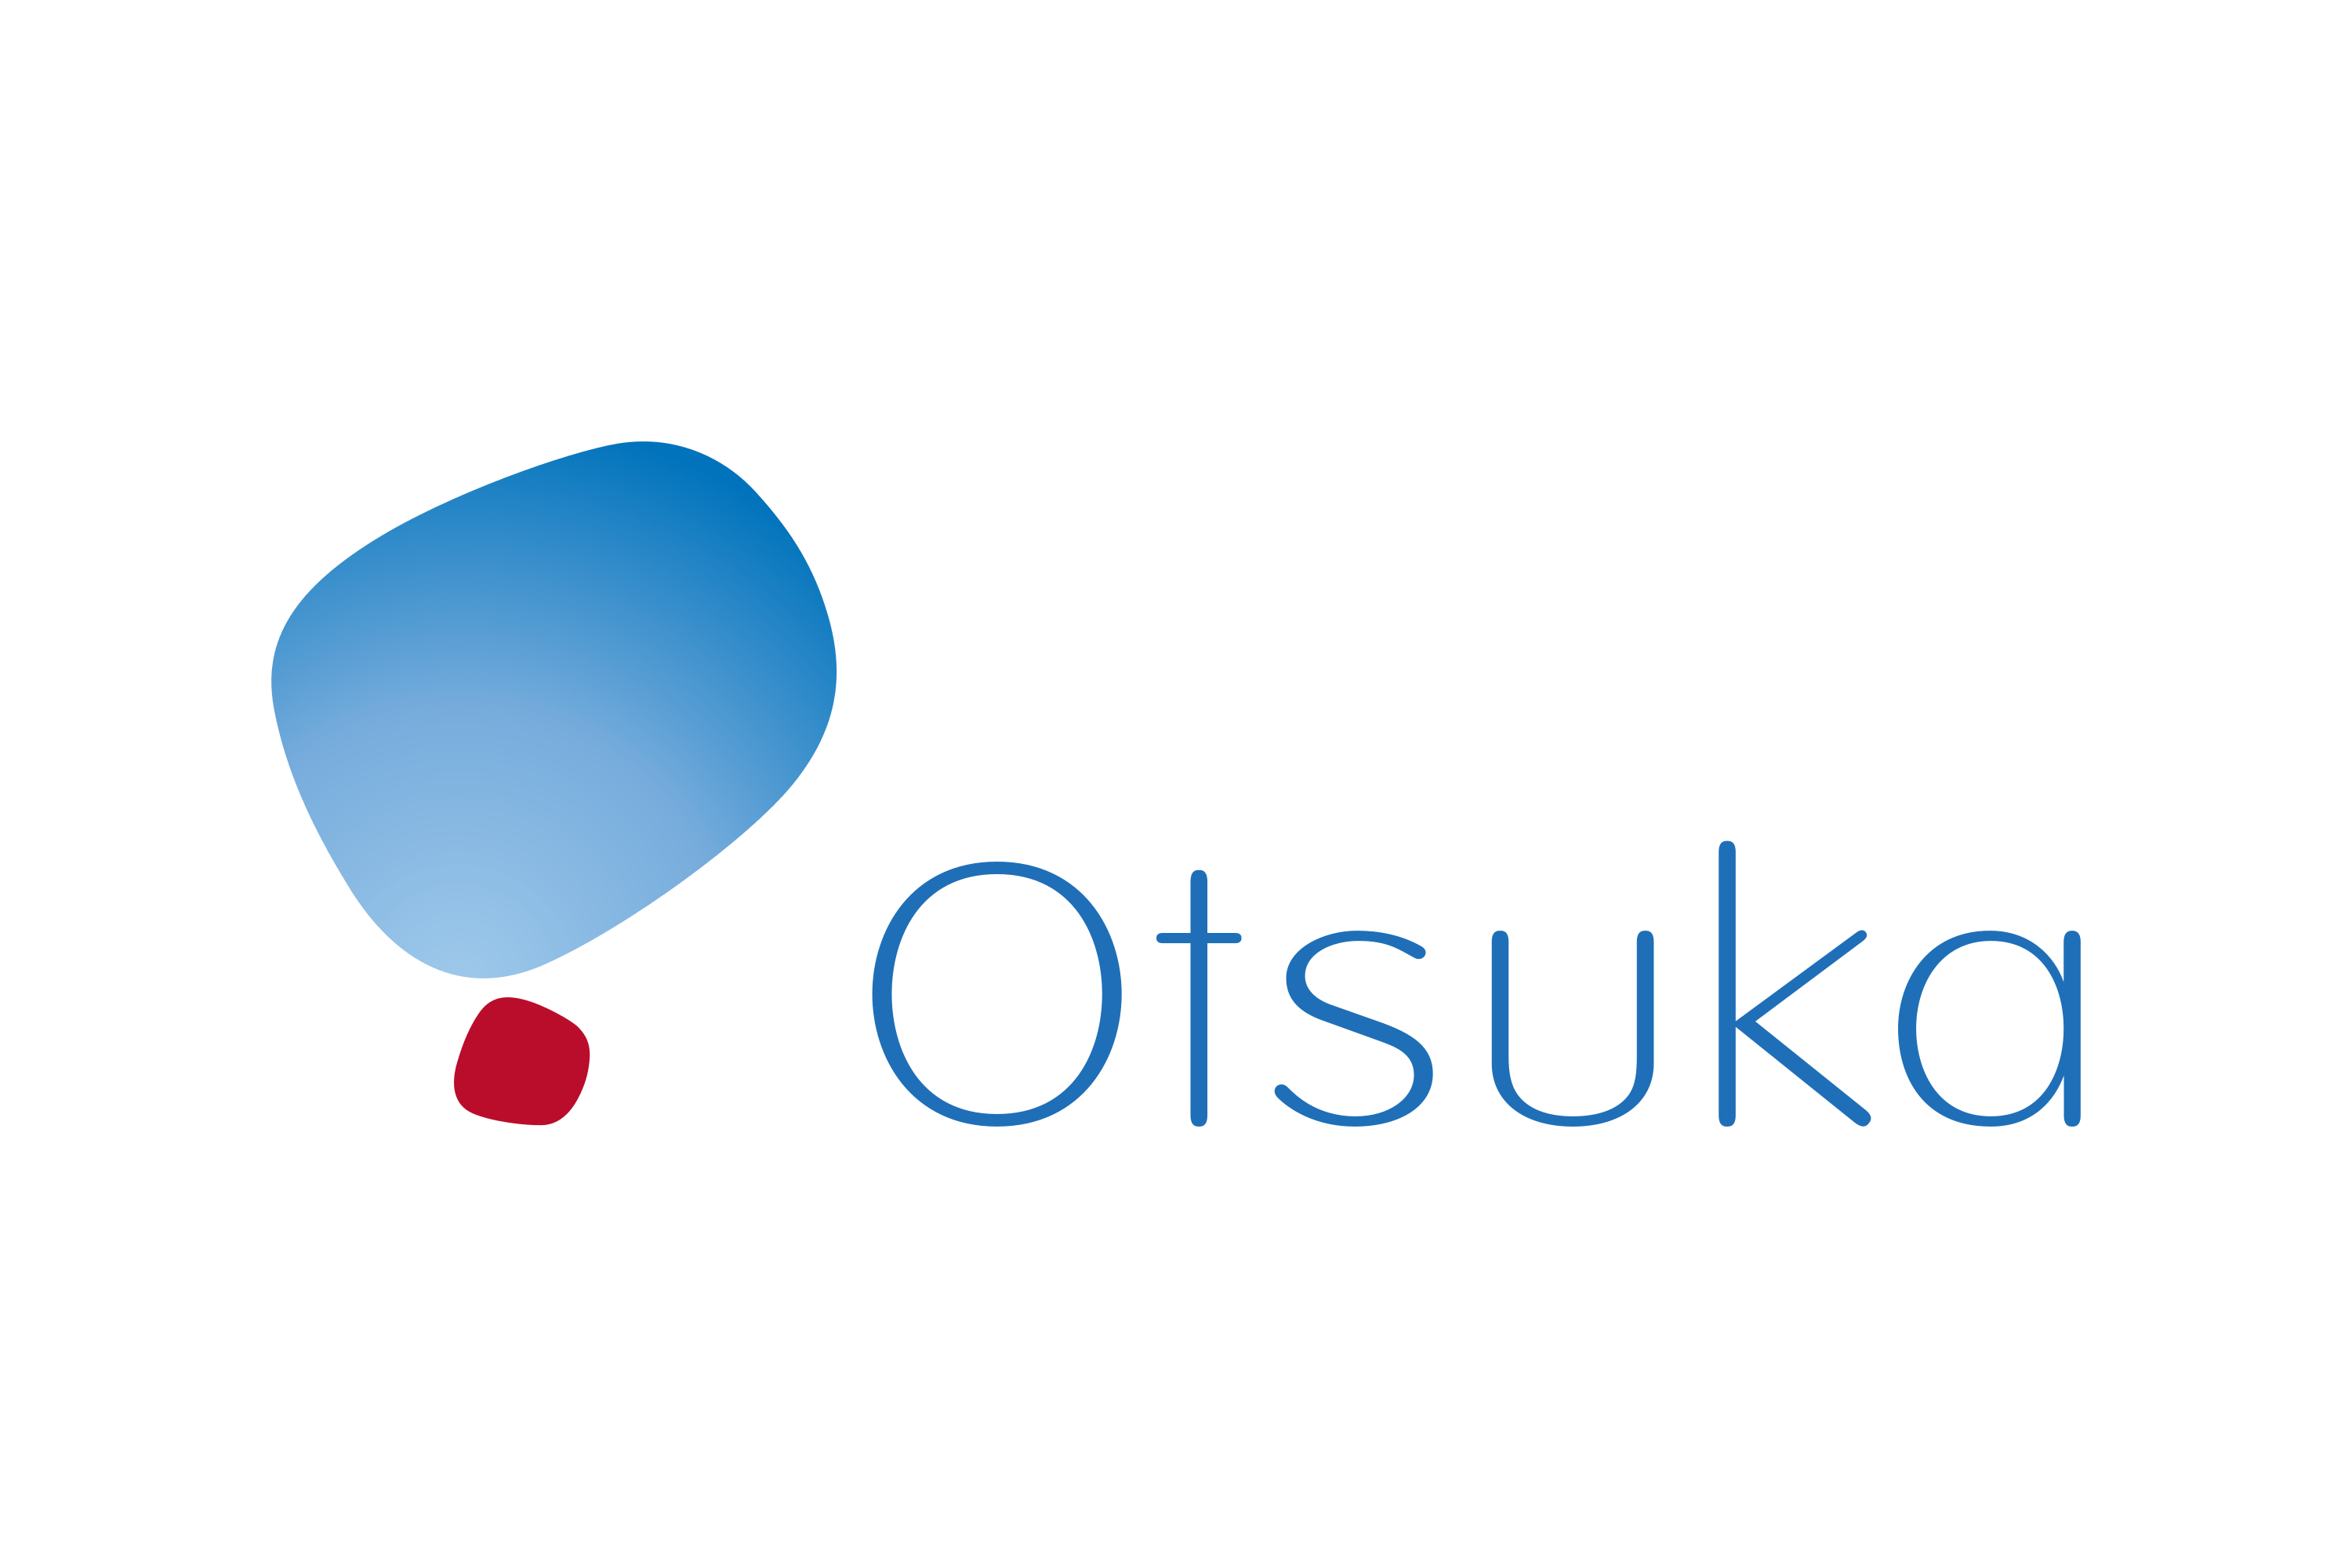 Otsuka Pharmaceutical Logo